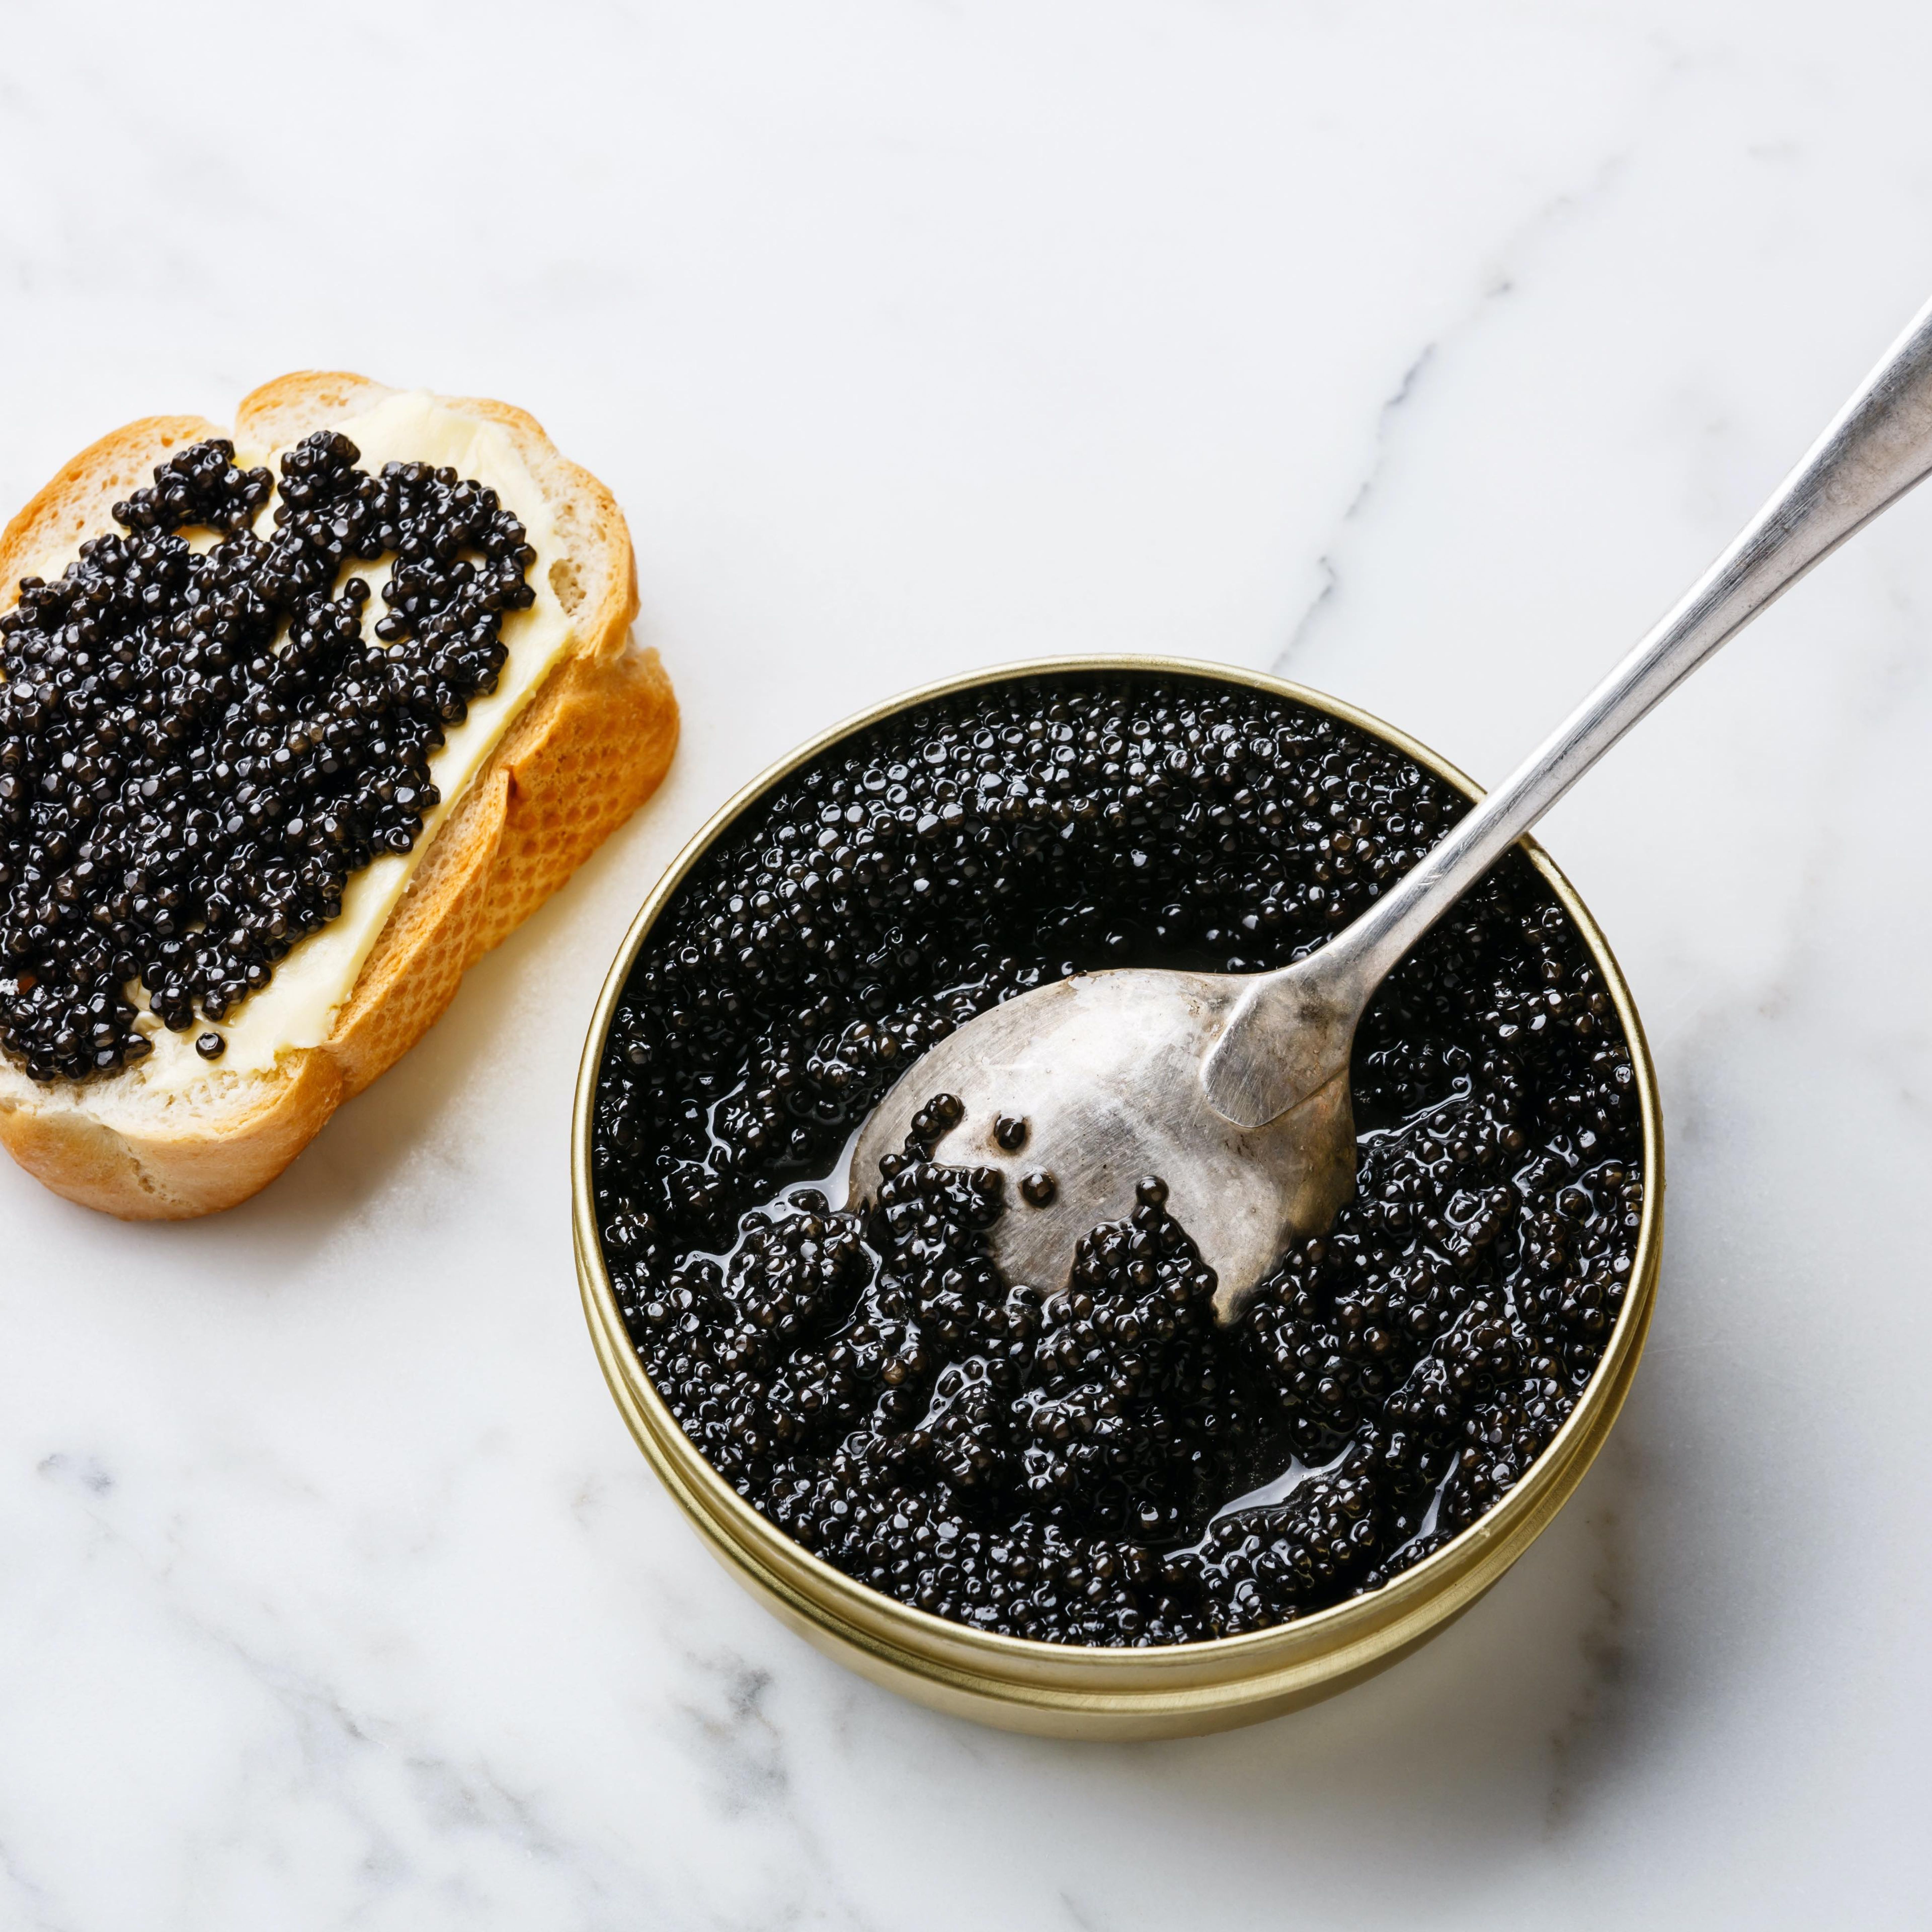 Achat de caviar français classic osciètre de la maison Sturia